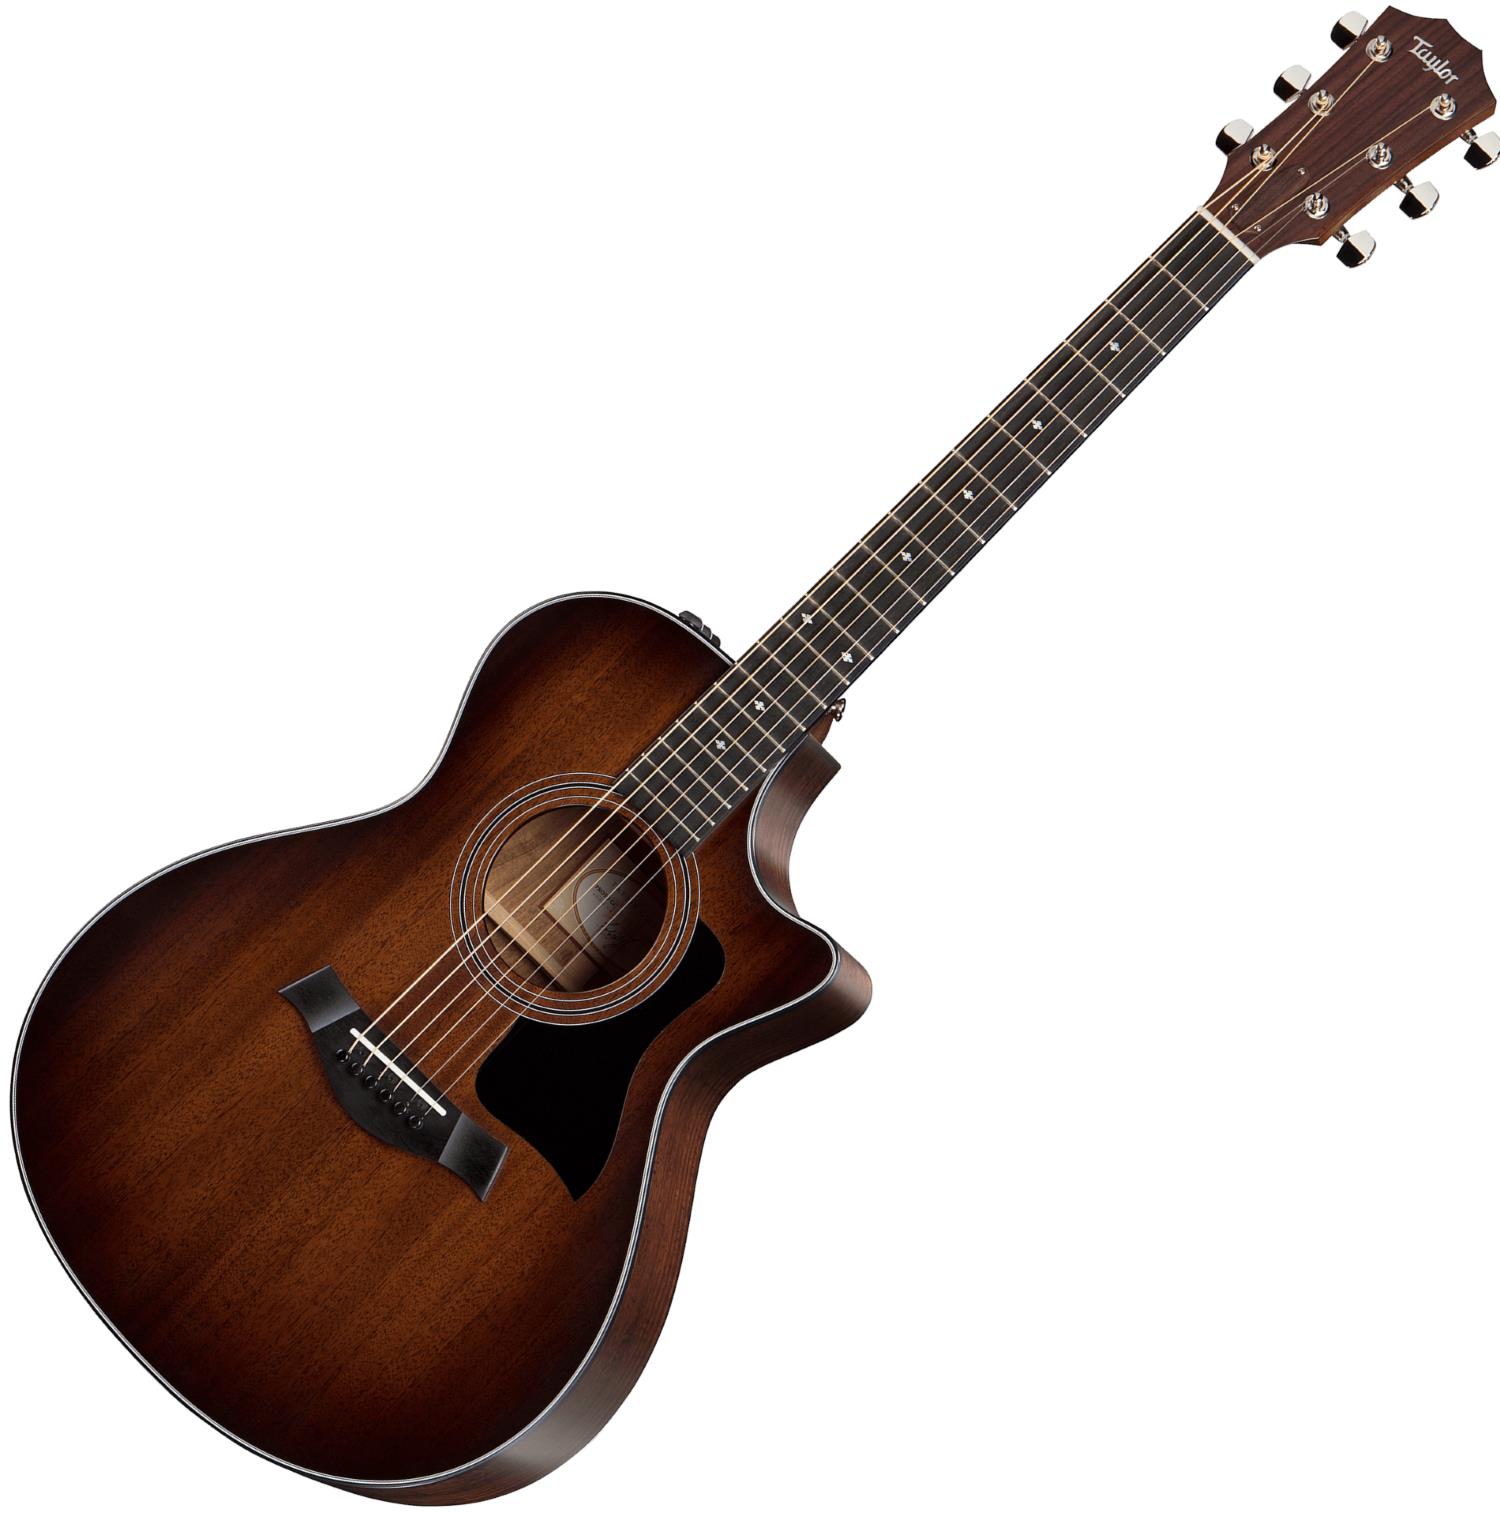 Taylor 322ce Acoustic-Electric Guitar